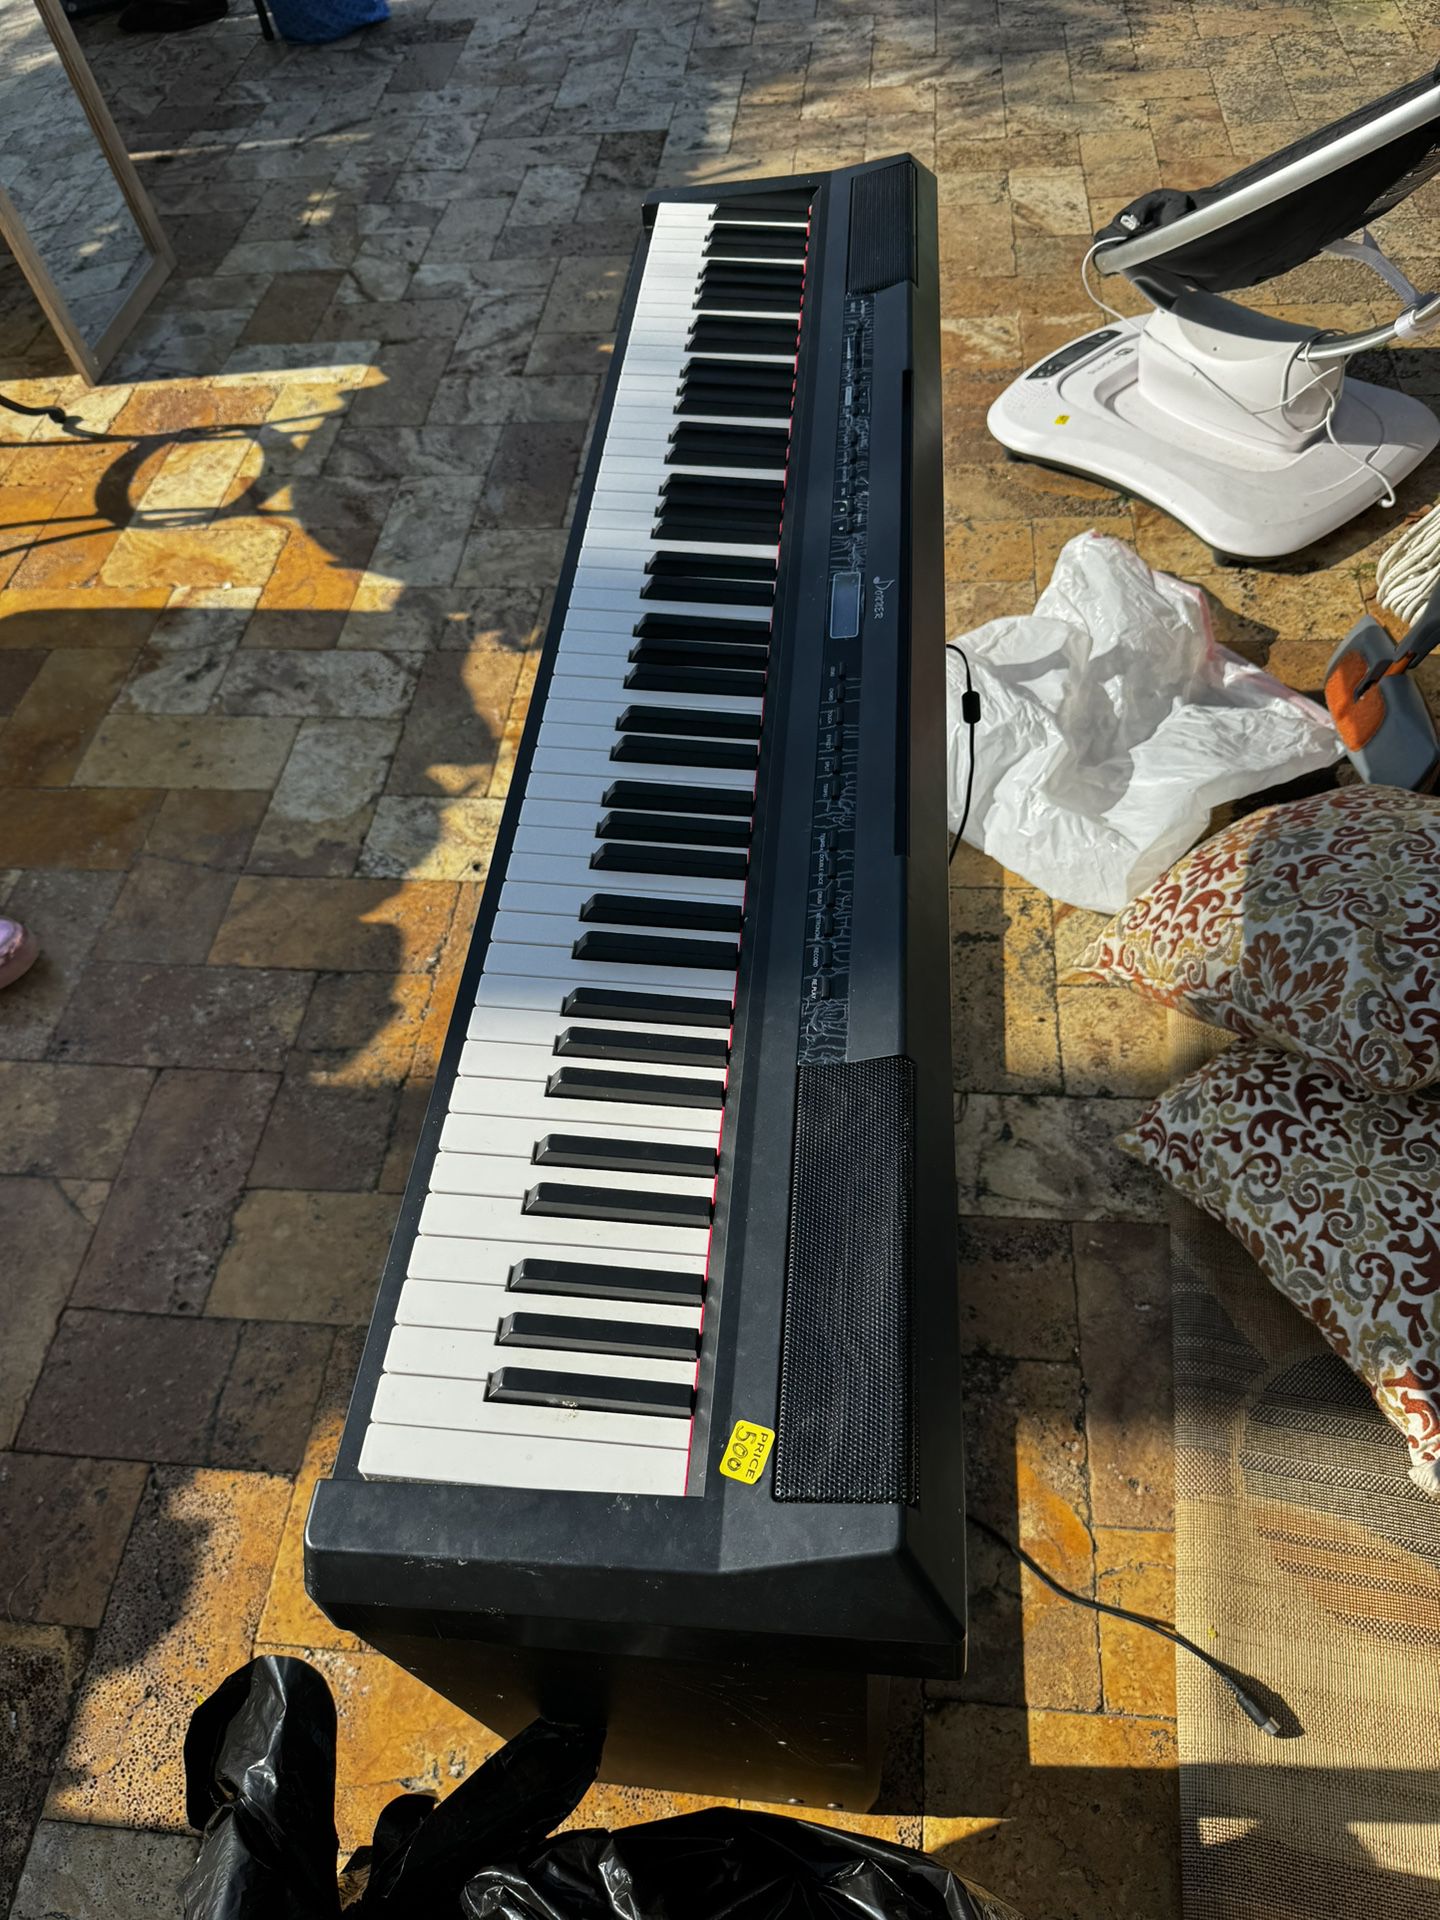 Piano Keyboard 